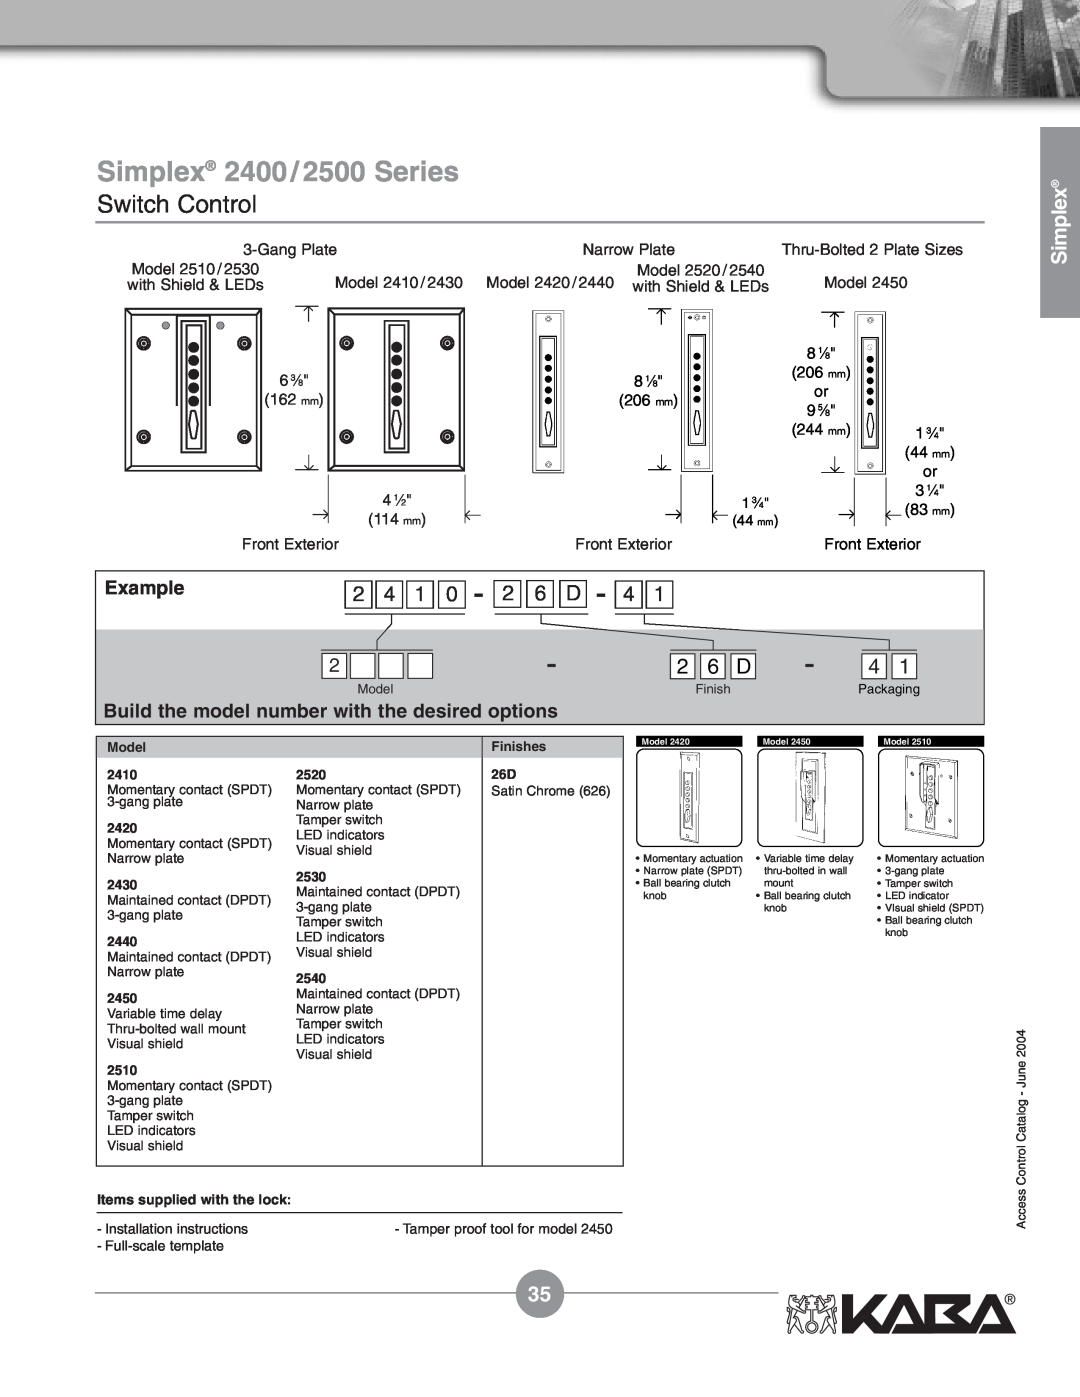 Assa Mechanical Pushbutton Locks manual Simplex 2400/2500 Series, Switch Control, Example 